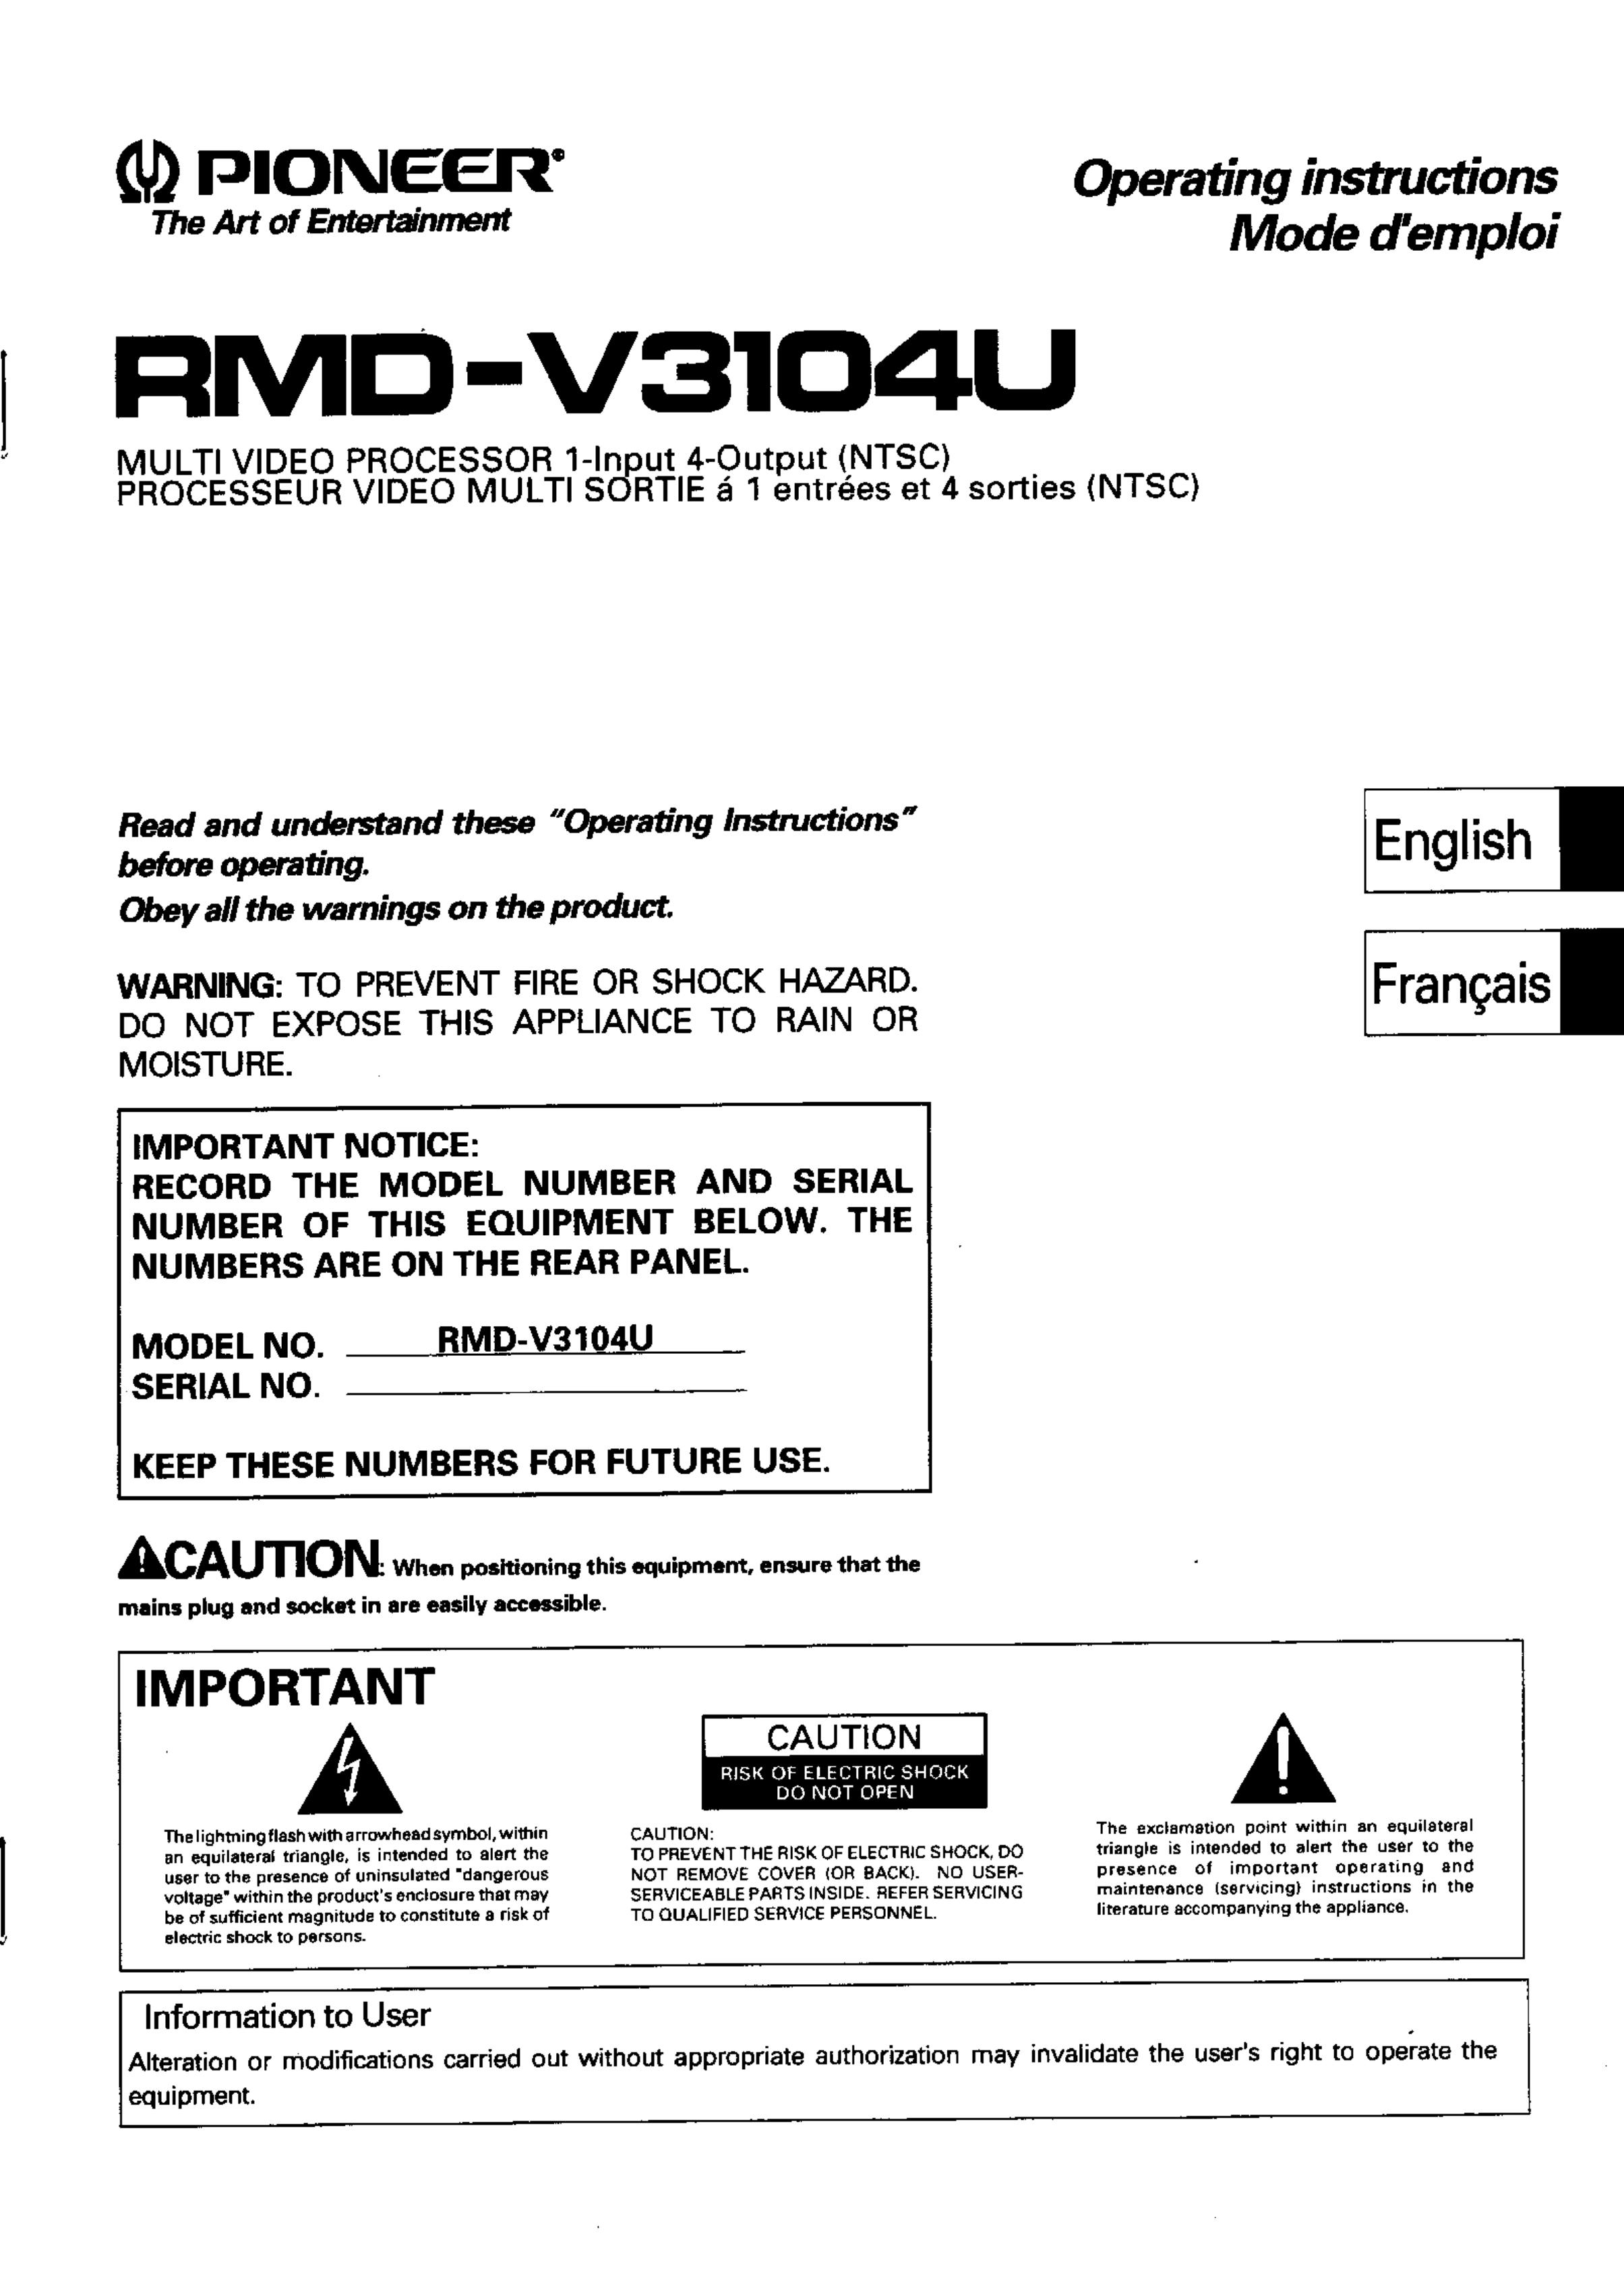 Akai RMD-V3104U Camcorder User Manual